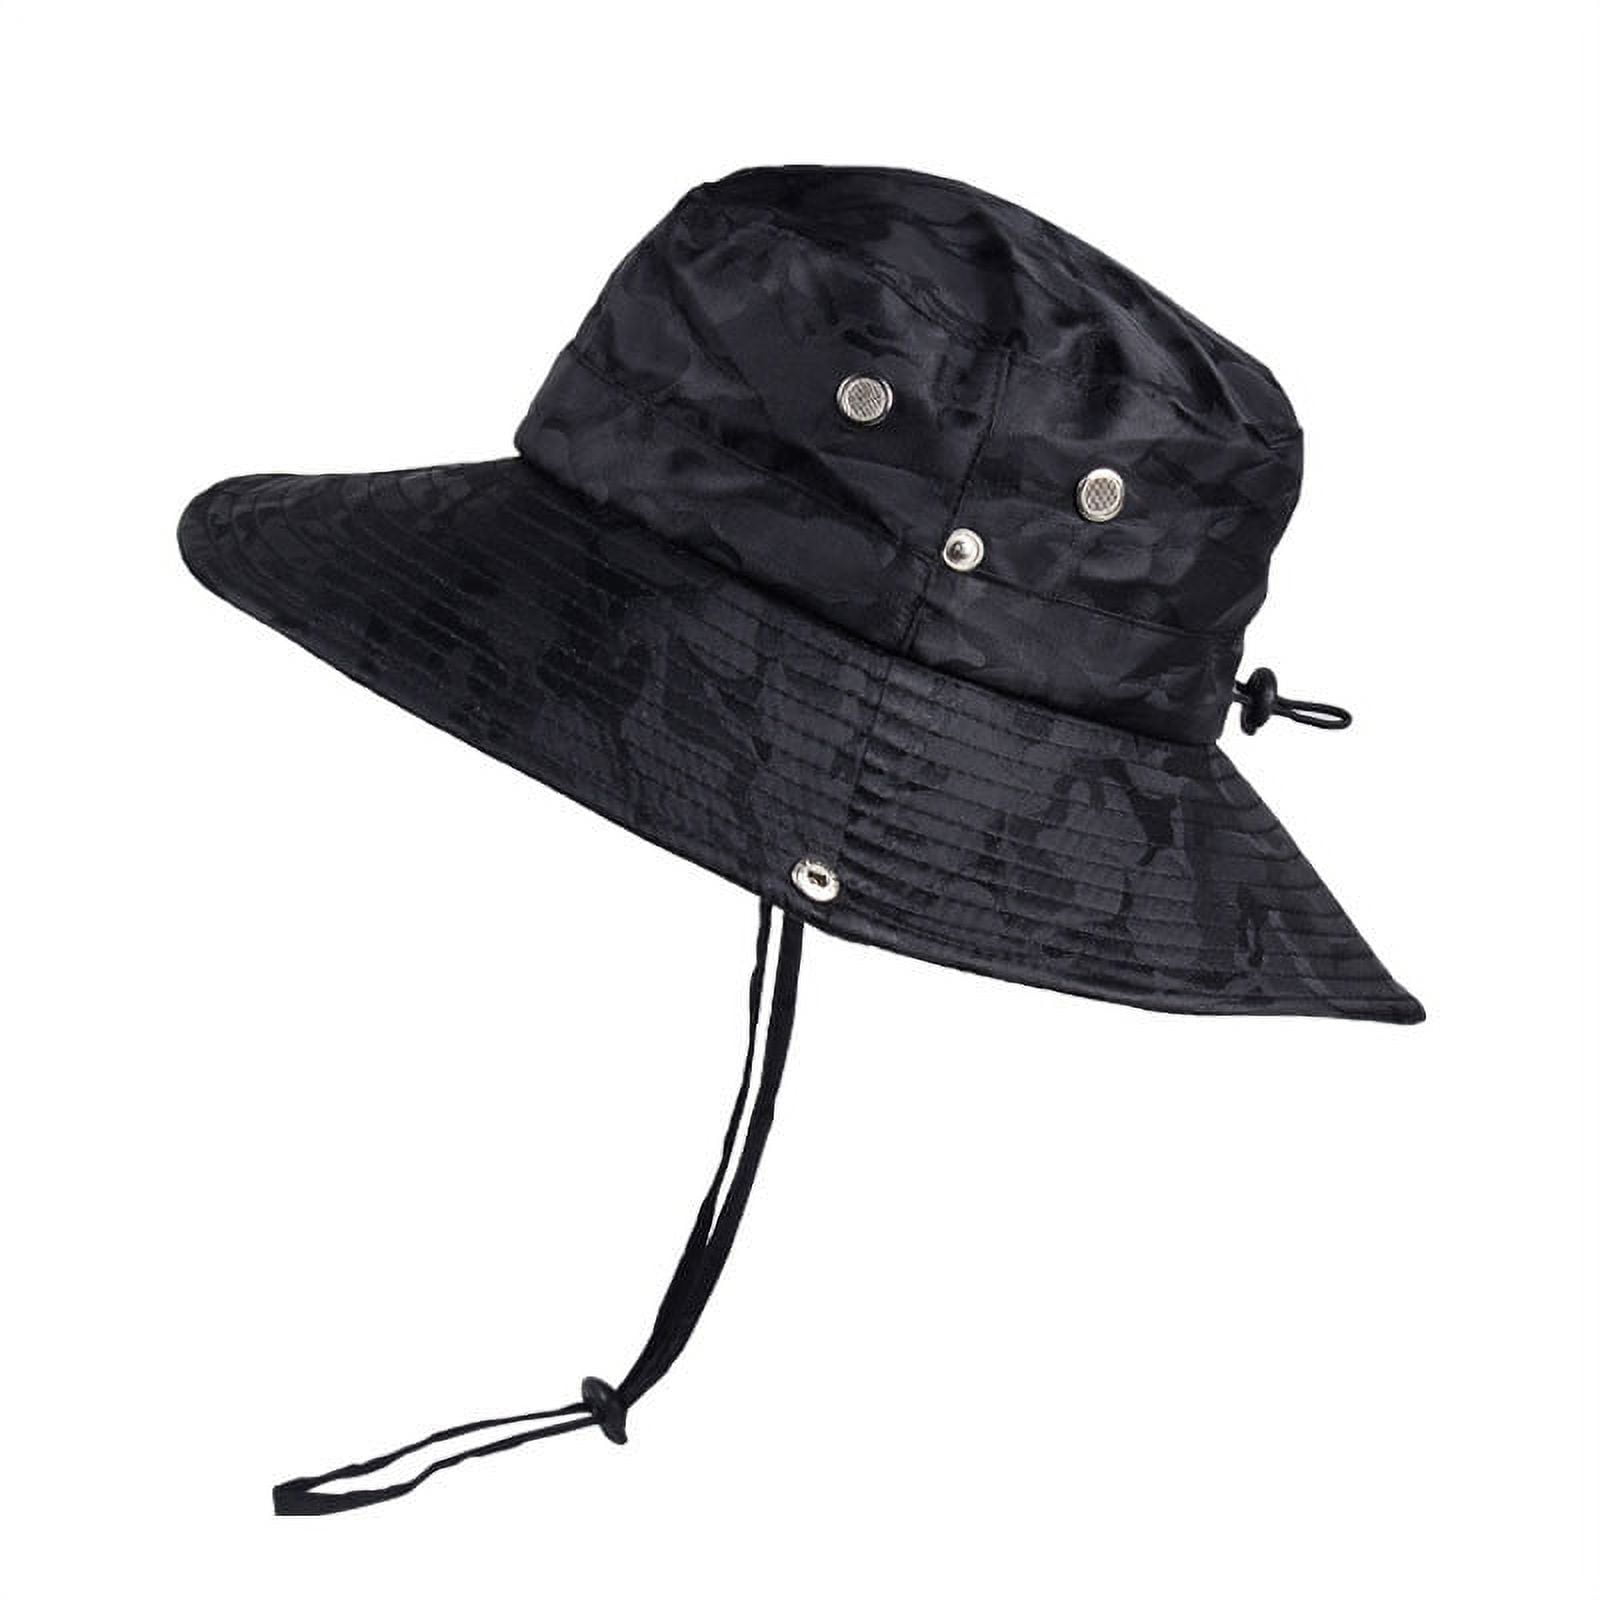 bucket black caps mnjin winter for men\'s camouflage anti-uv hat baseball sunbonnet outdoor drawstring breathable beanies